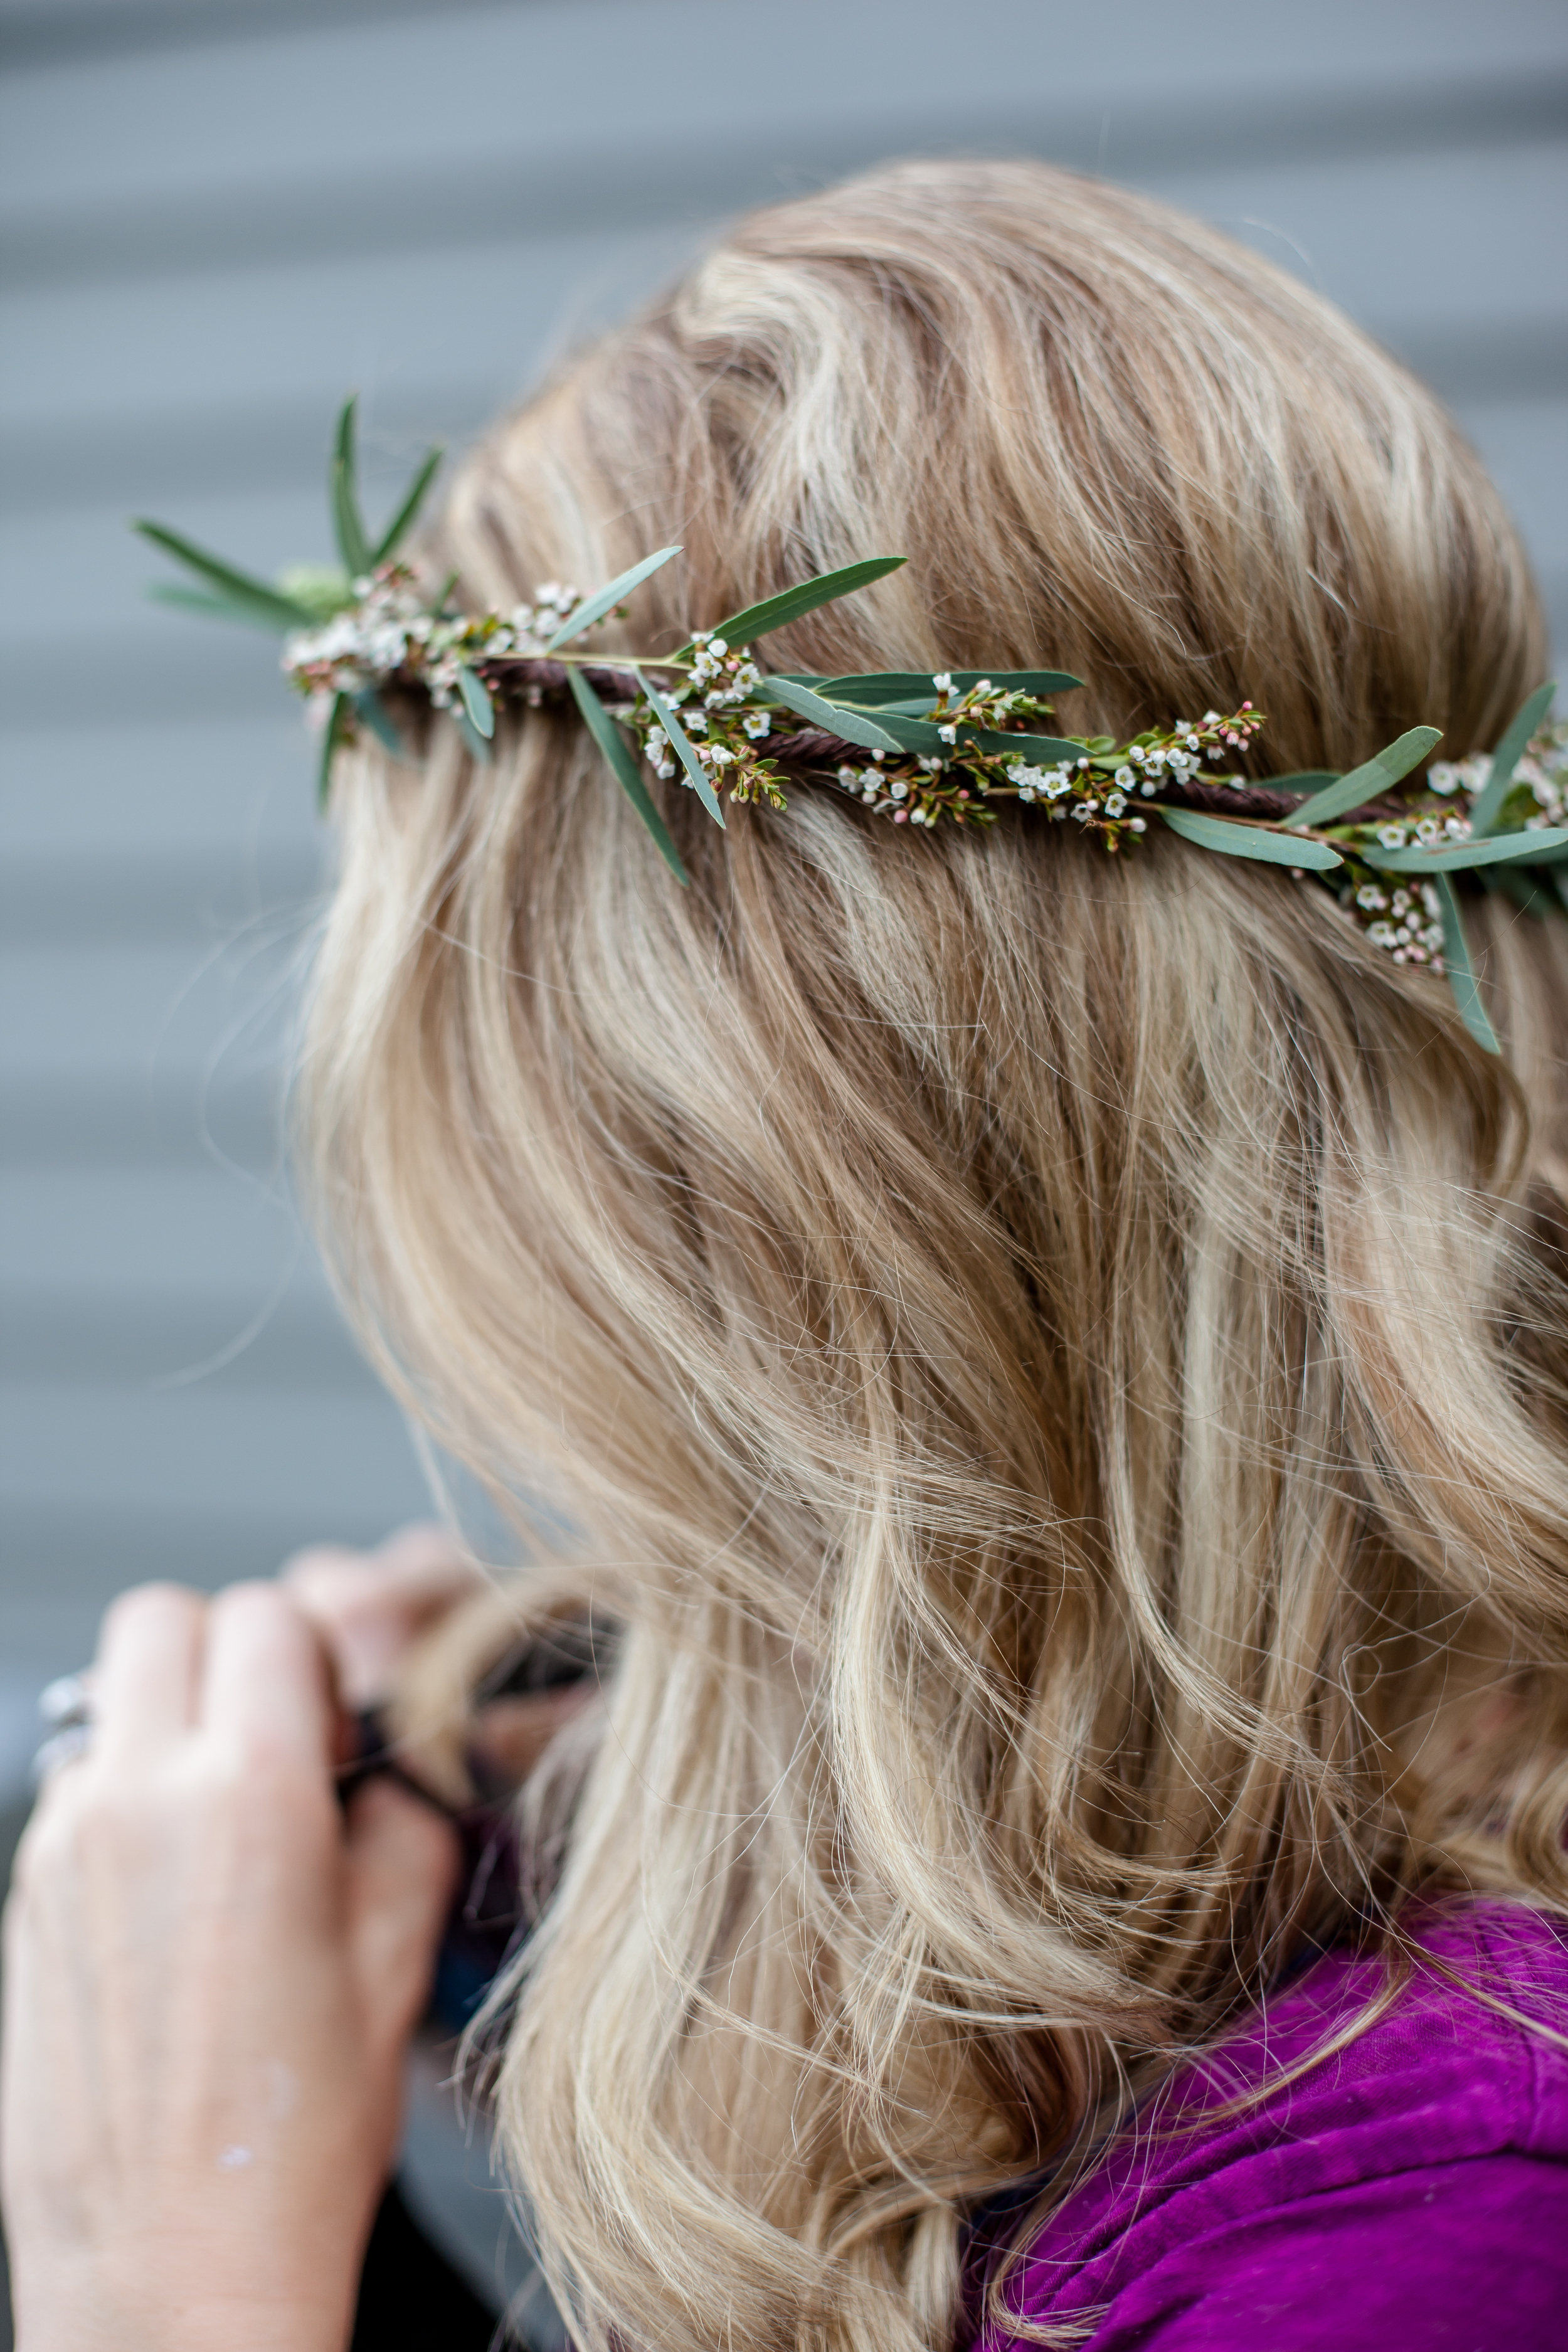 Amazon.com : Flower crown garland Headband Headdress hair Wreath Hawaiian  style wedding party (pink) : Beauty & Personal Care